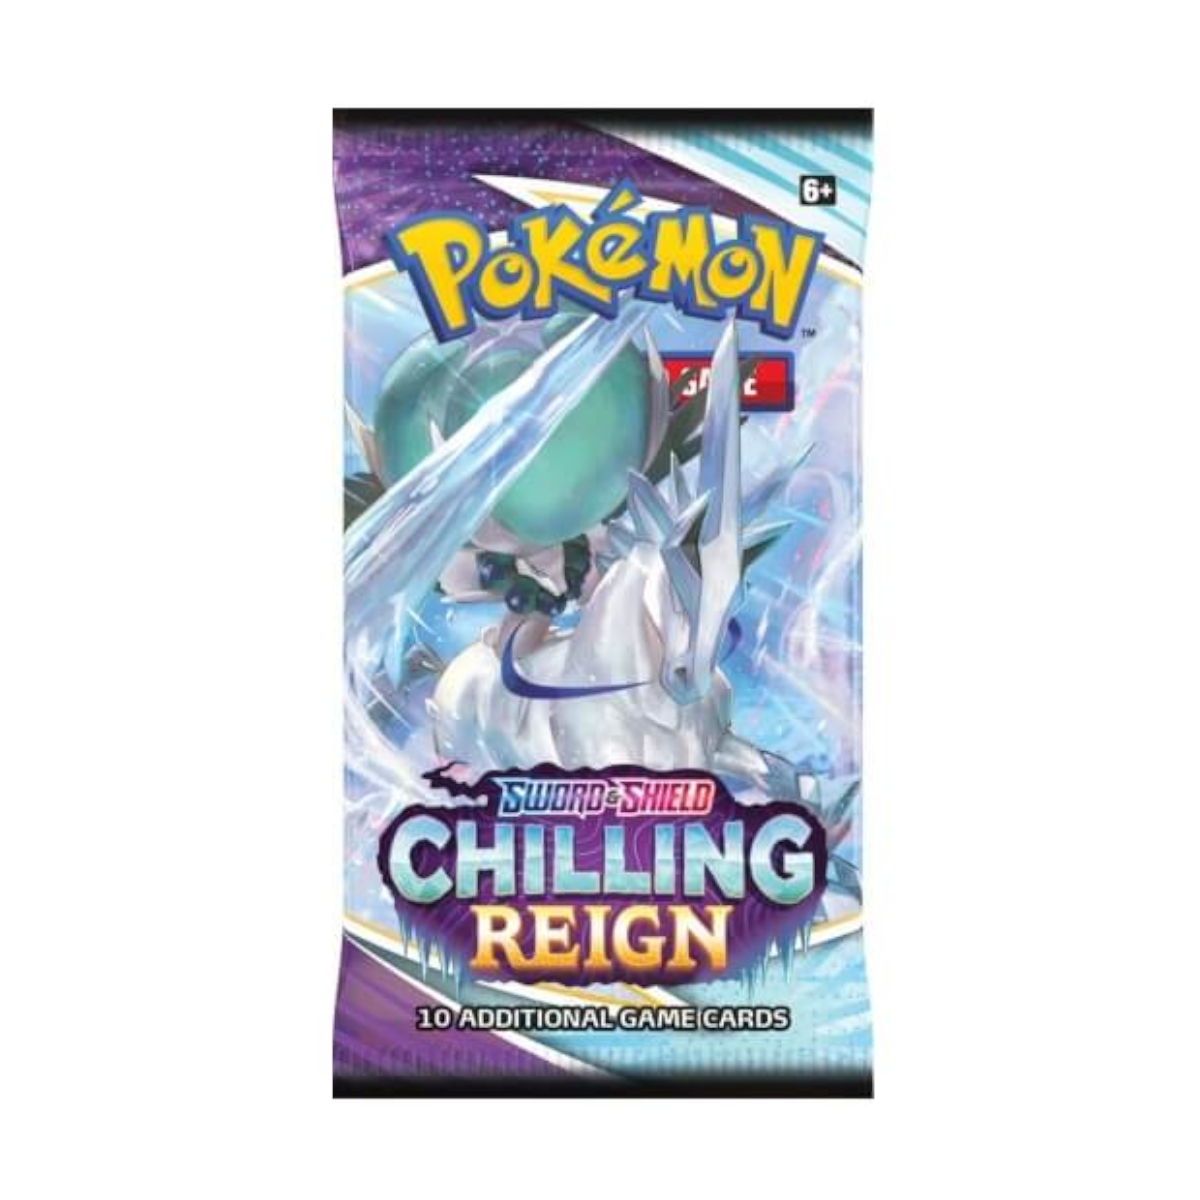 Pokémon - Chilling Reign Booster